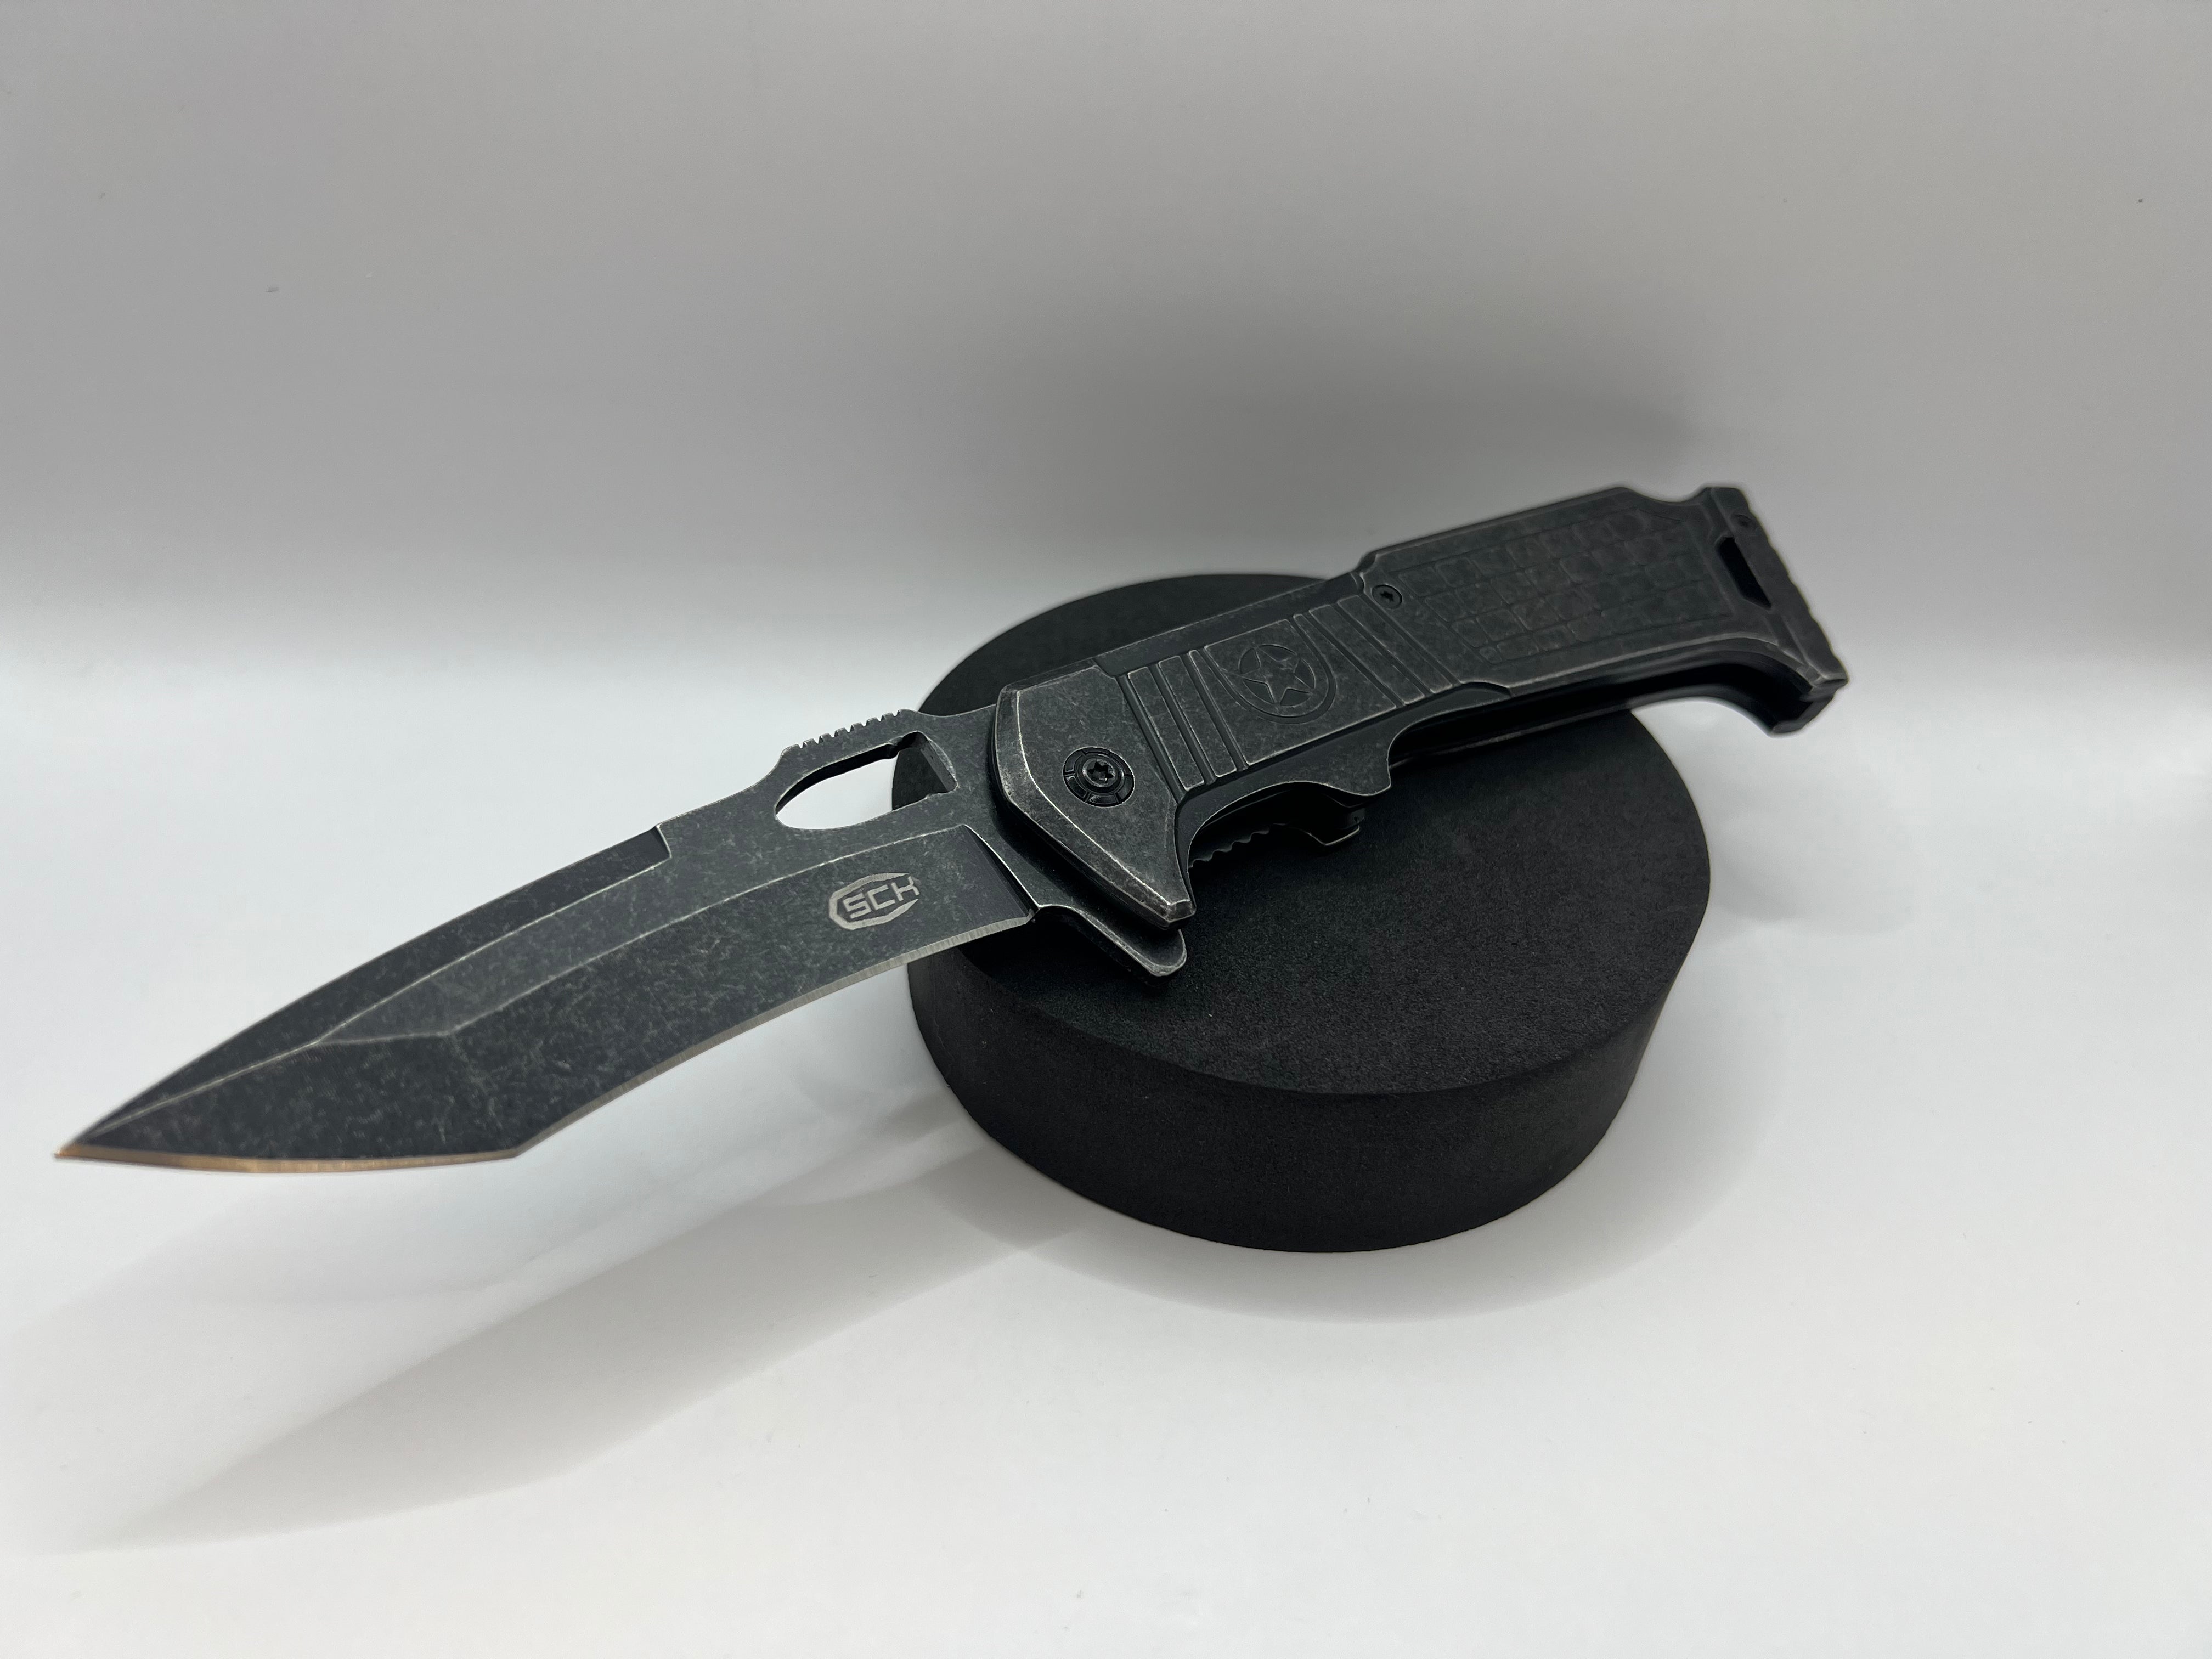 Folding Pocket Knife with Spring Support (CW-K71)